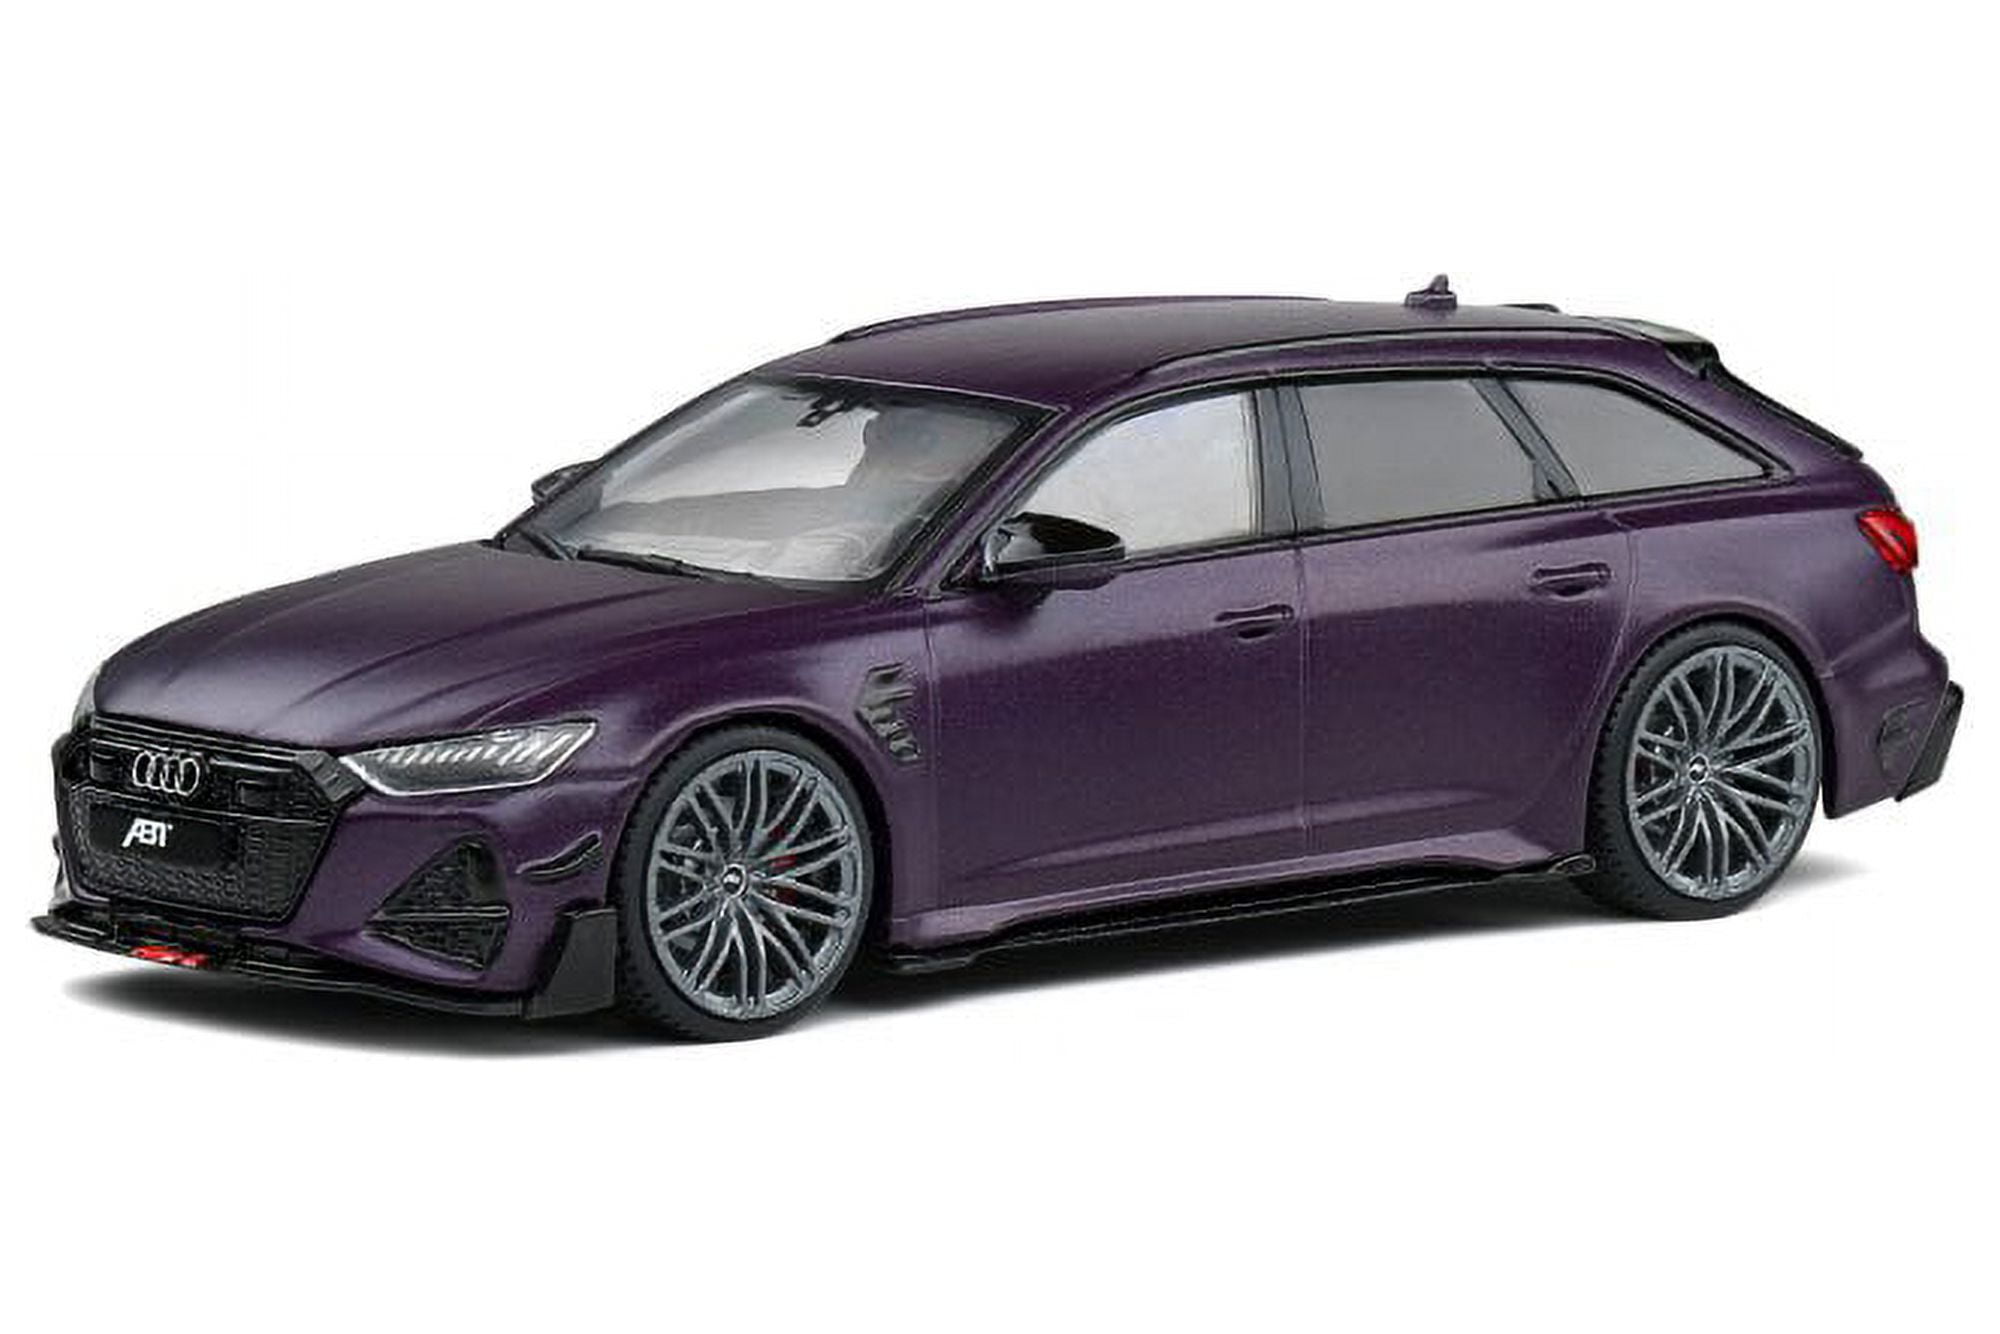 2022 Audi ABT RS6-R, Purple - Solido S4310701 - 1/43 Scale Diecast Model Car